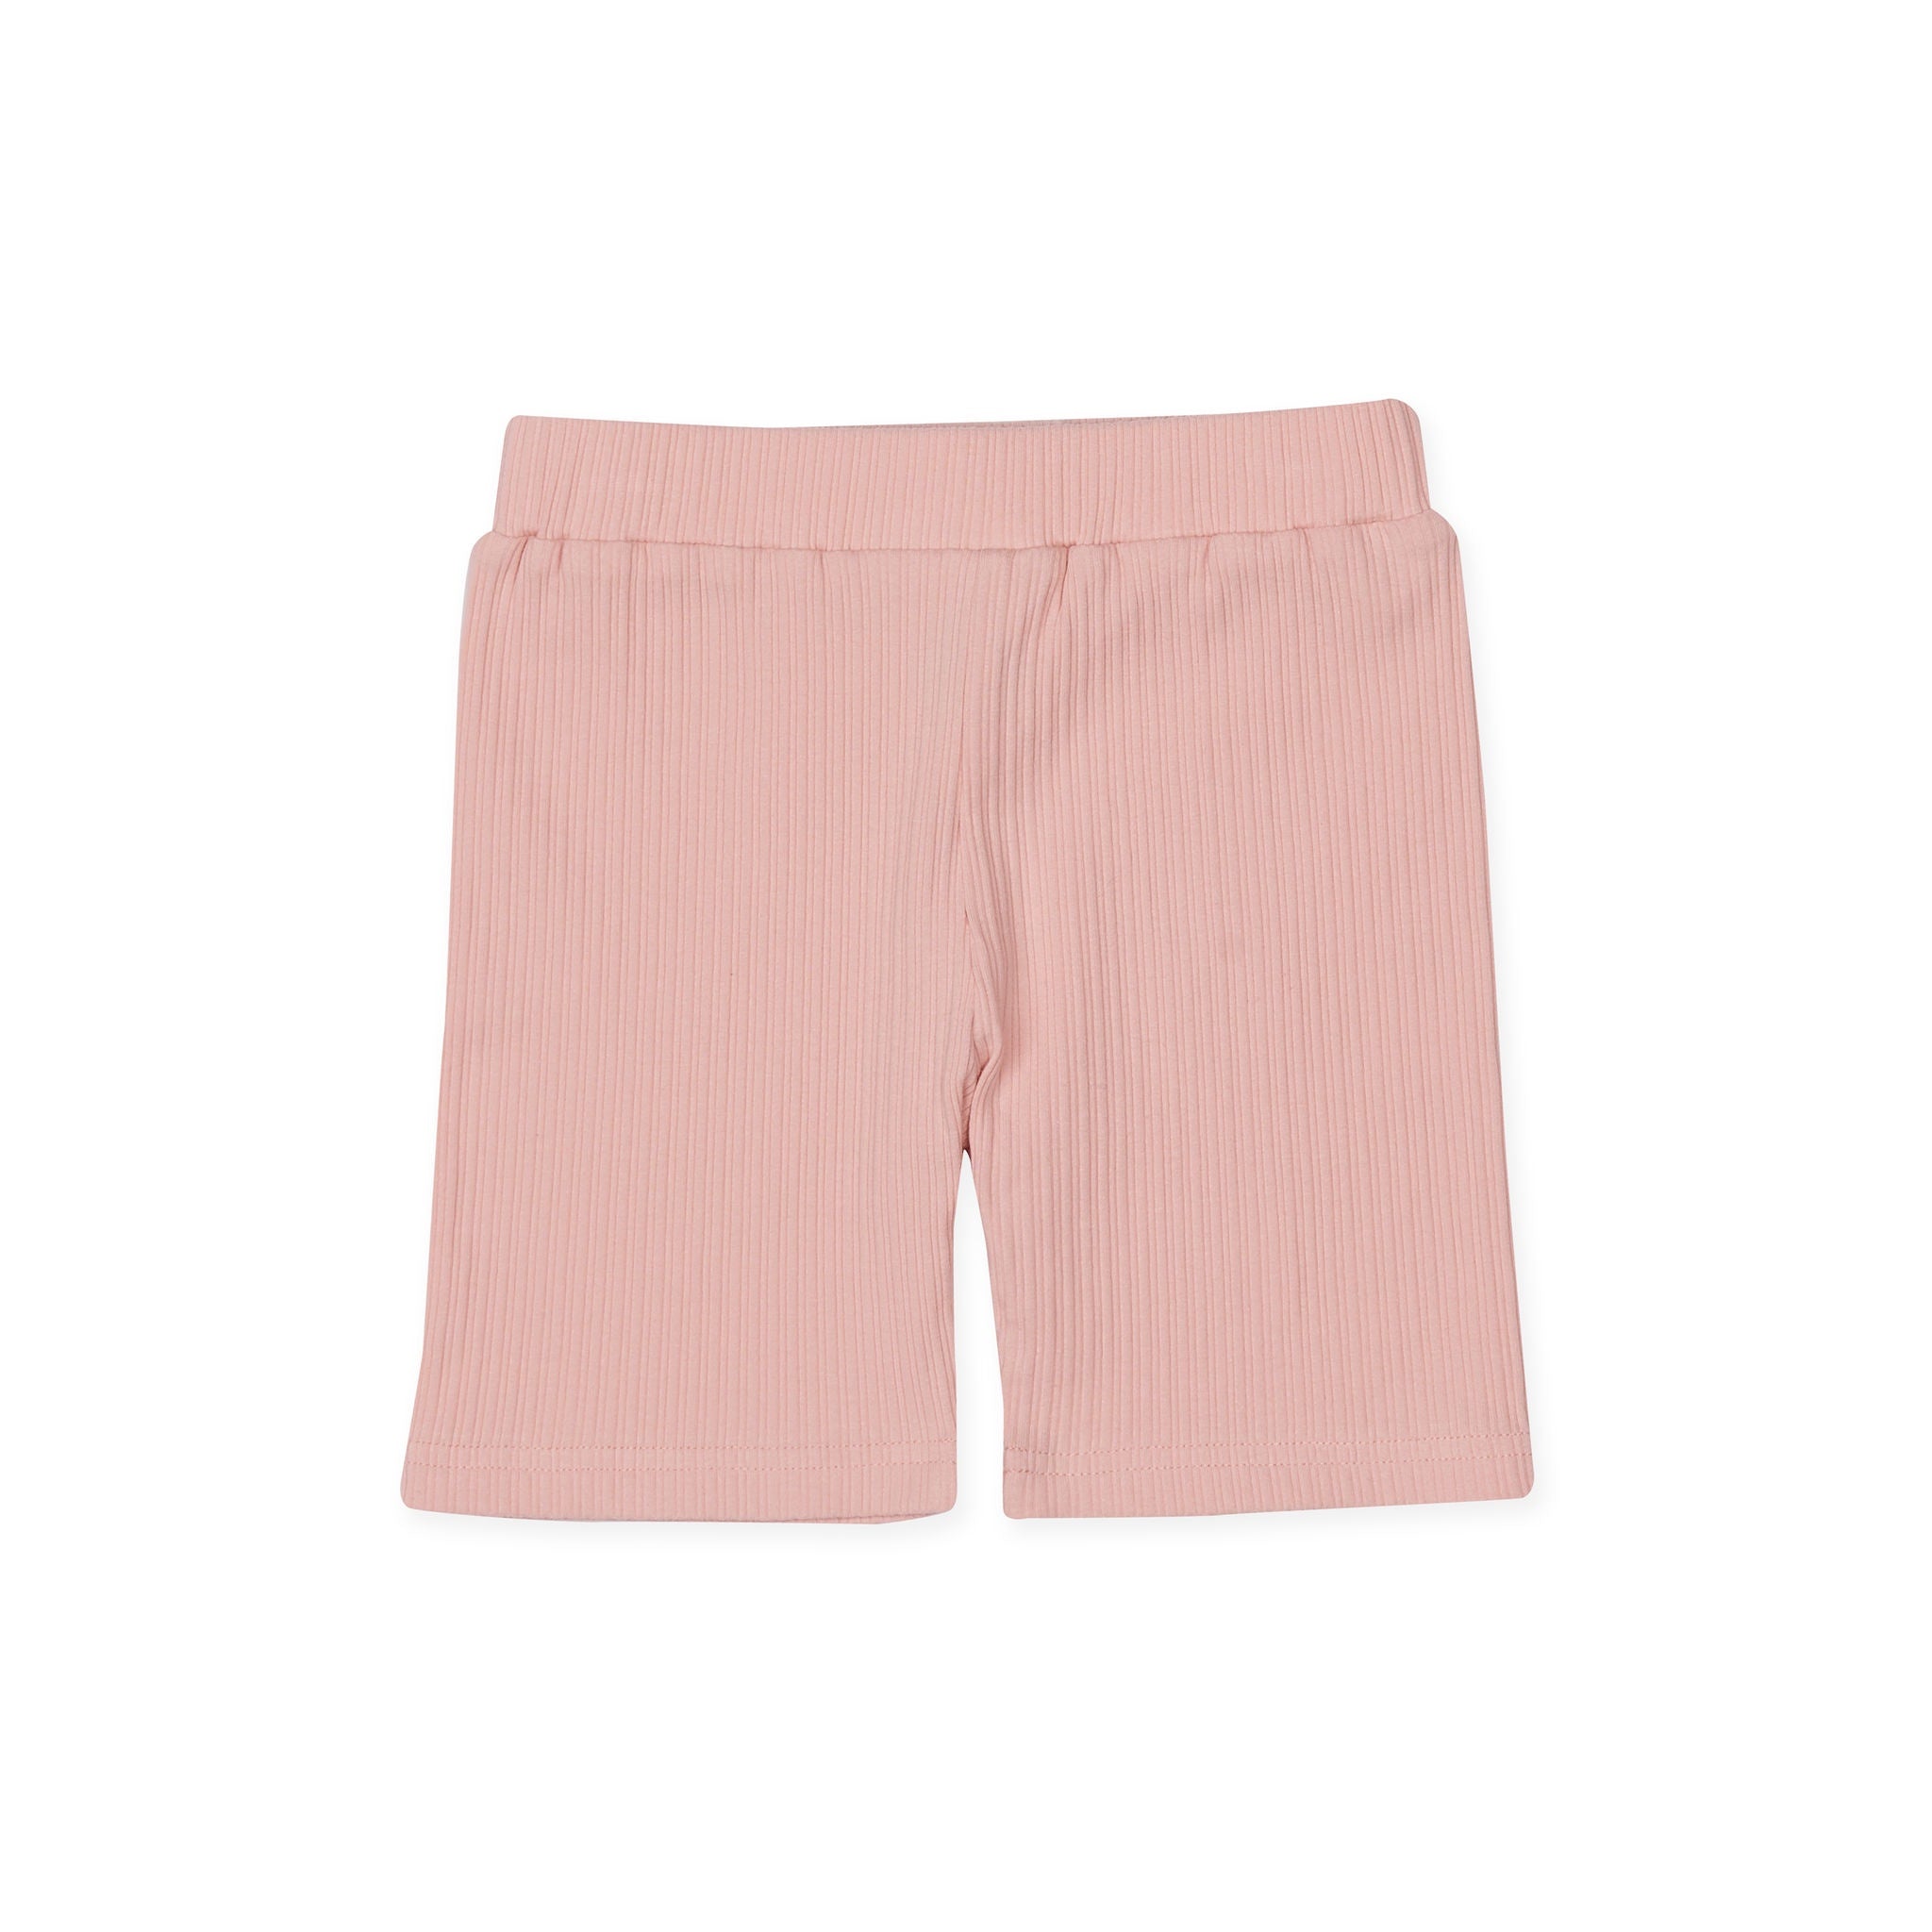 Kapow Kids - Rib Bike Shorts - Shell Pink